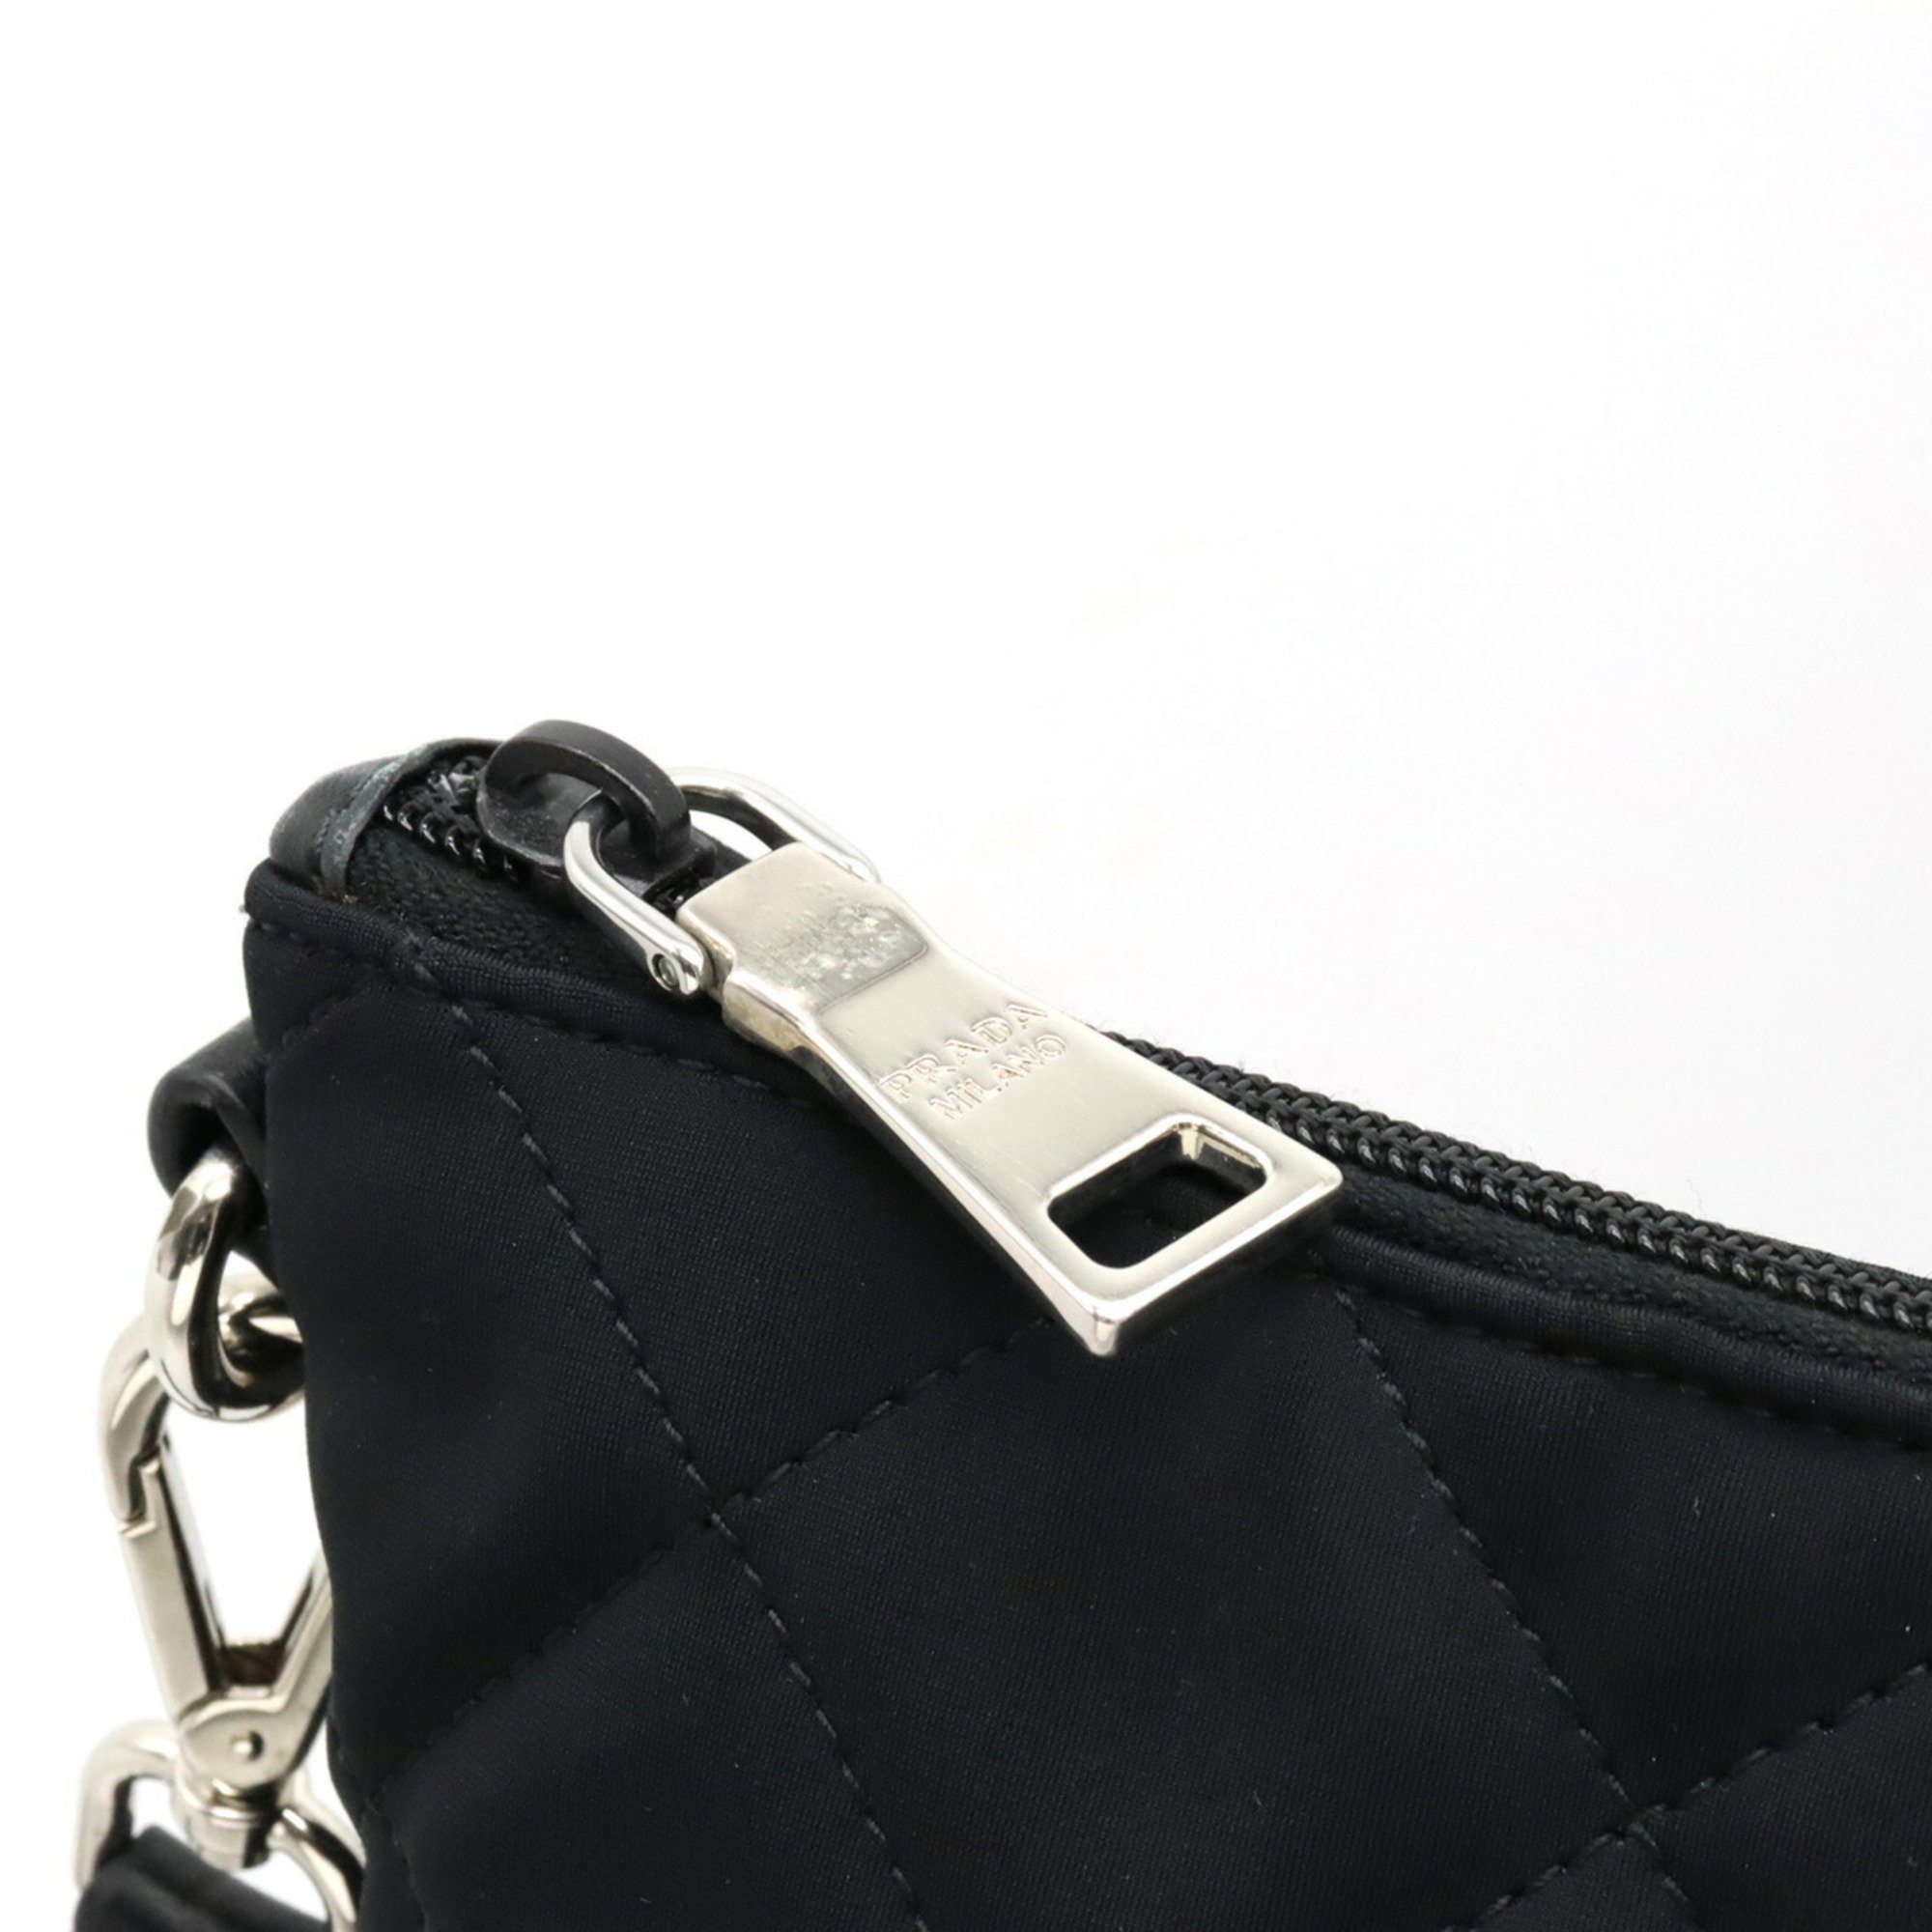 PRADA Prada Quilted Tote Bag Shoulder Nylon Leather NERO Black Purchased at Japan Outlet BN2149